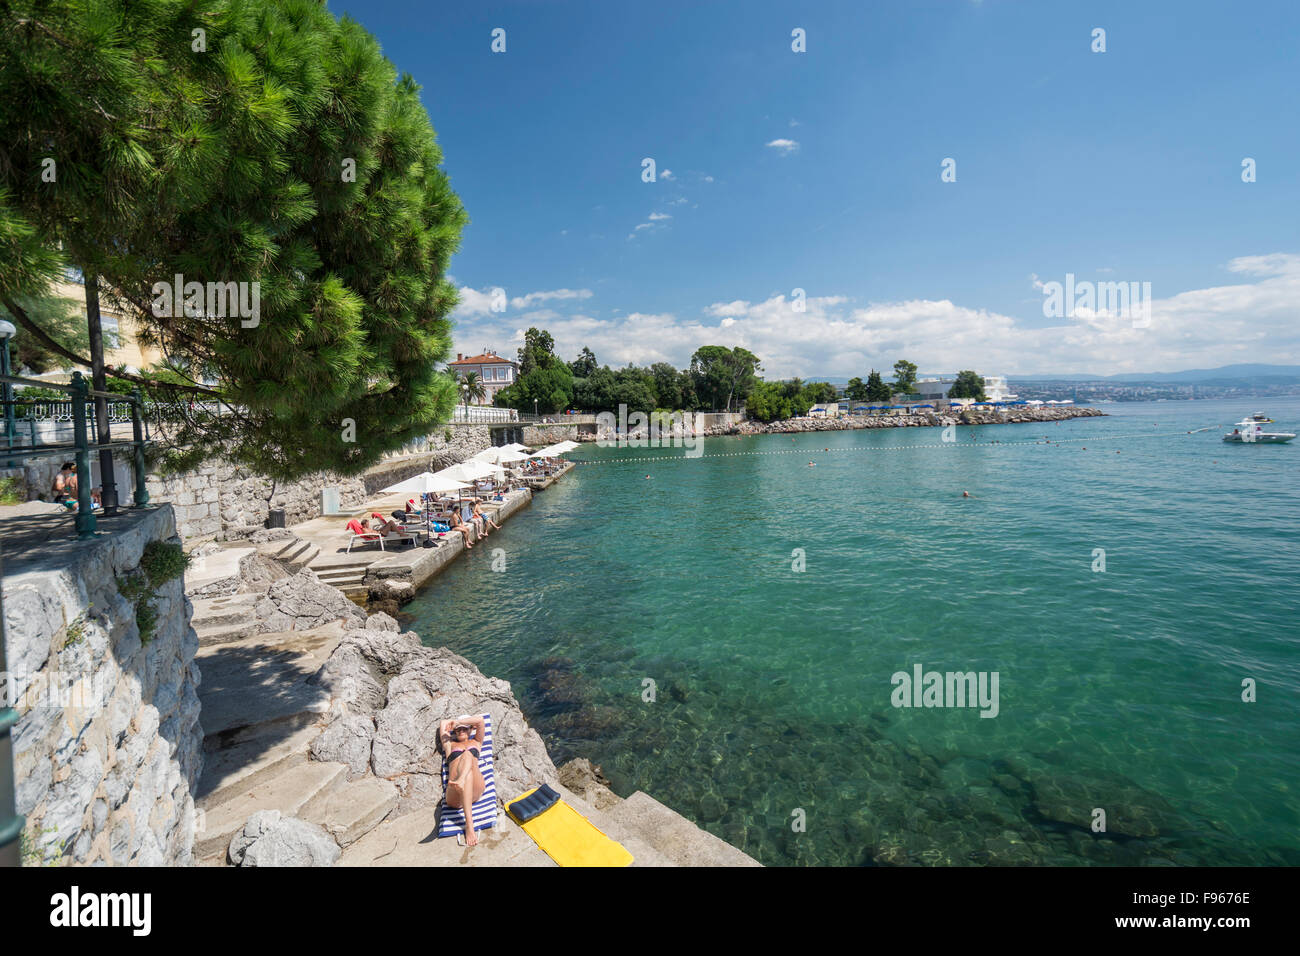 Tourists relaxing on the shoreline in Opatija, Croatia Stock Photo